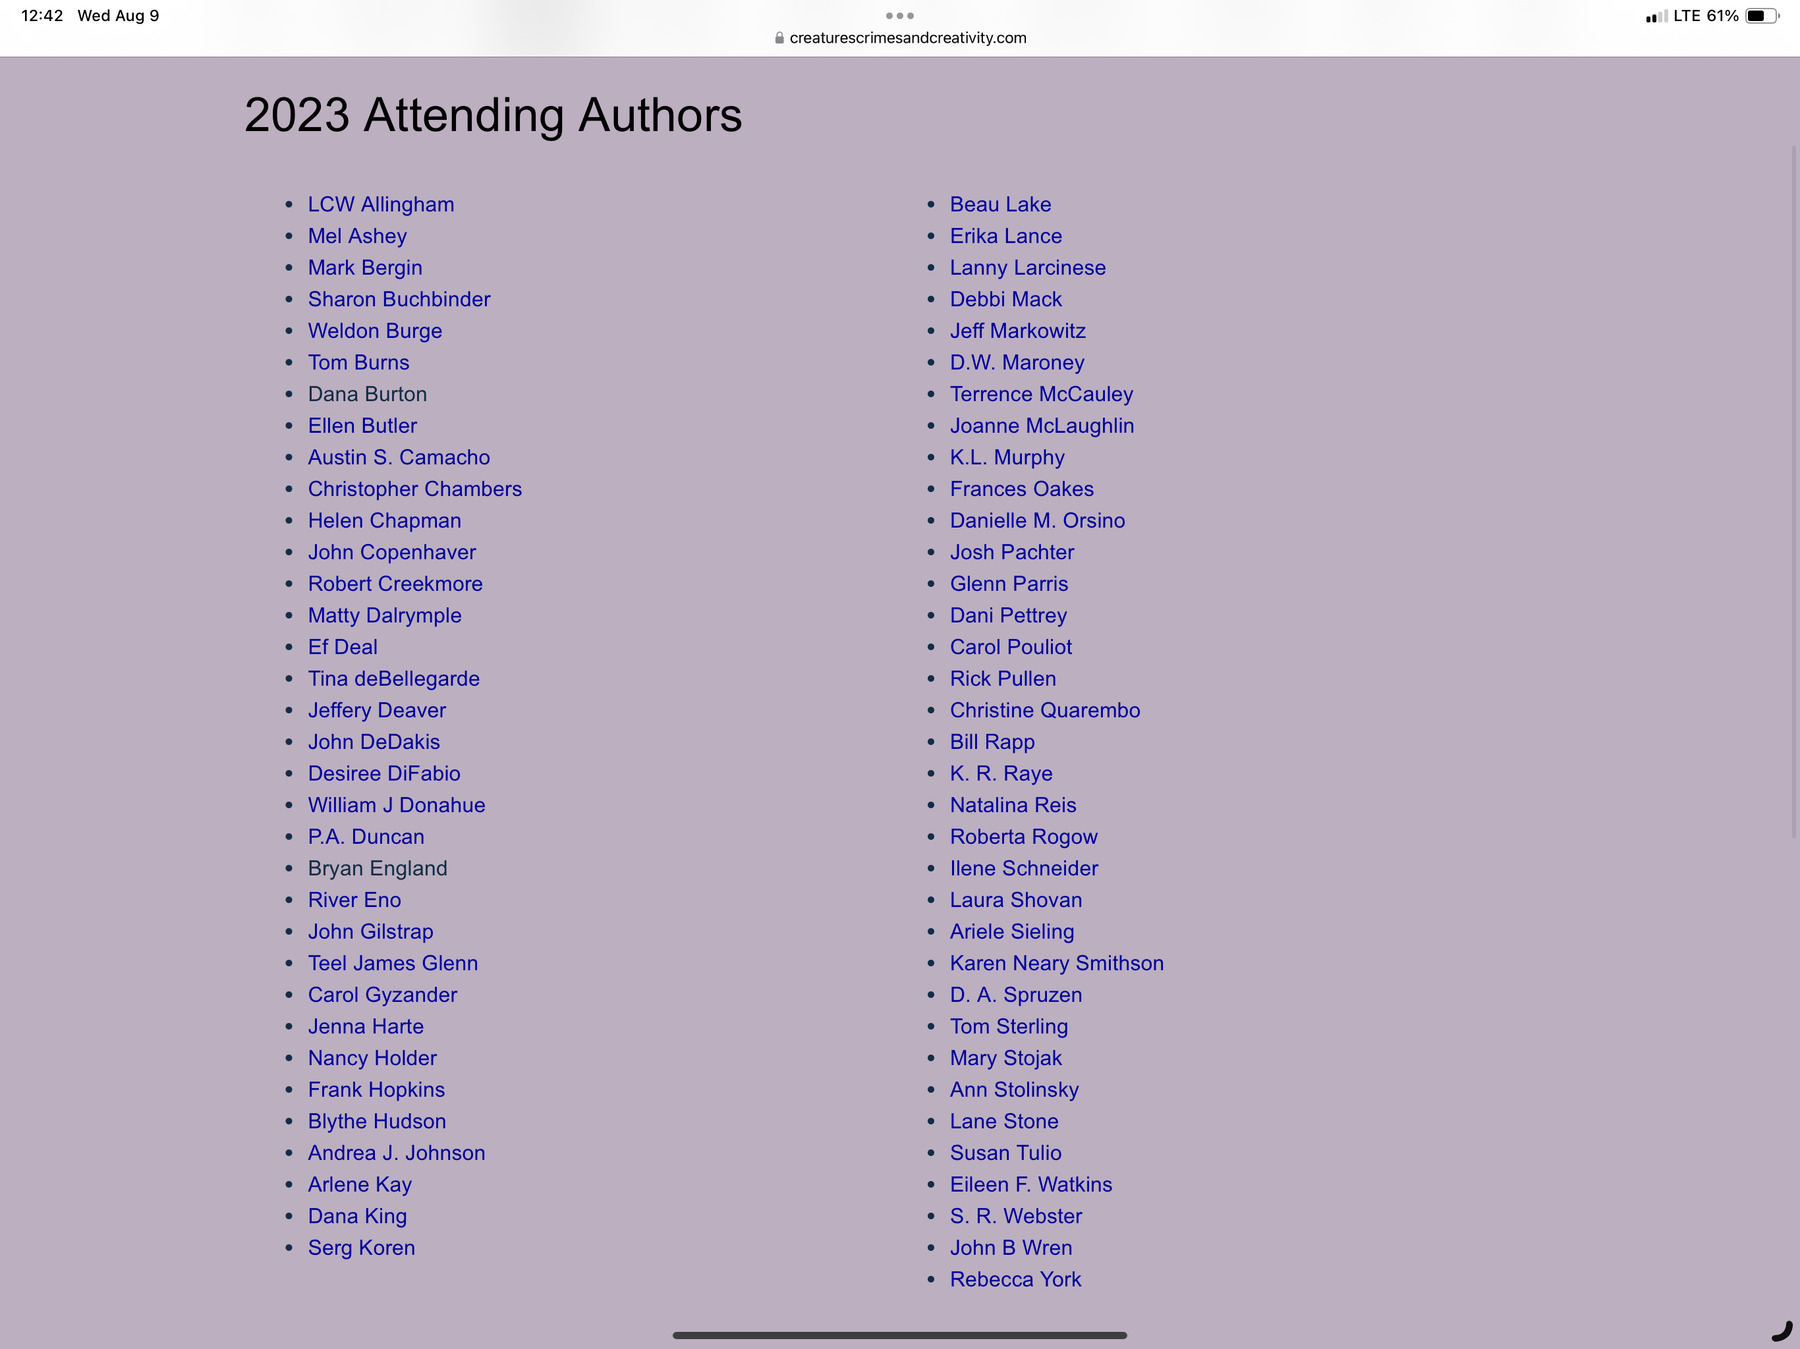 Attending authors list.